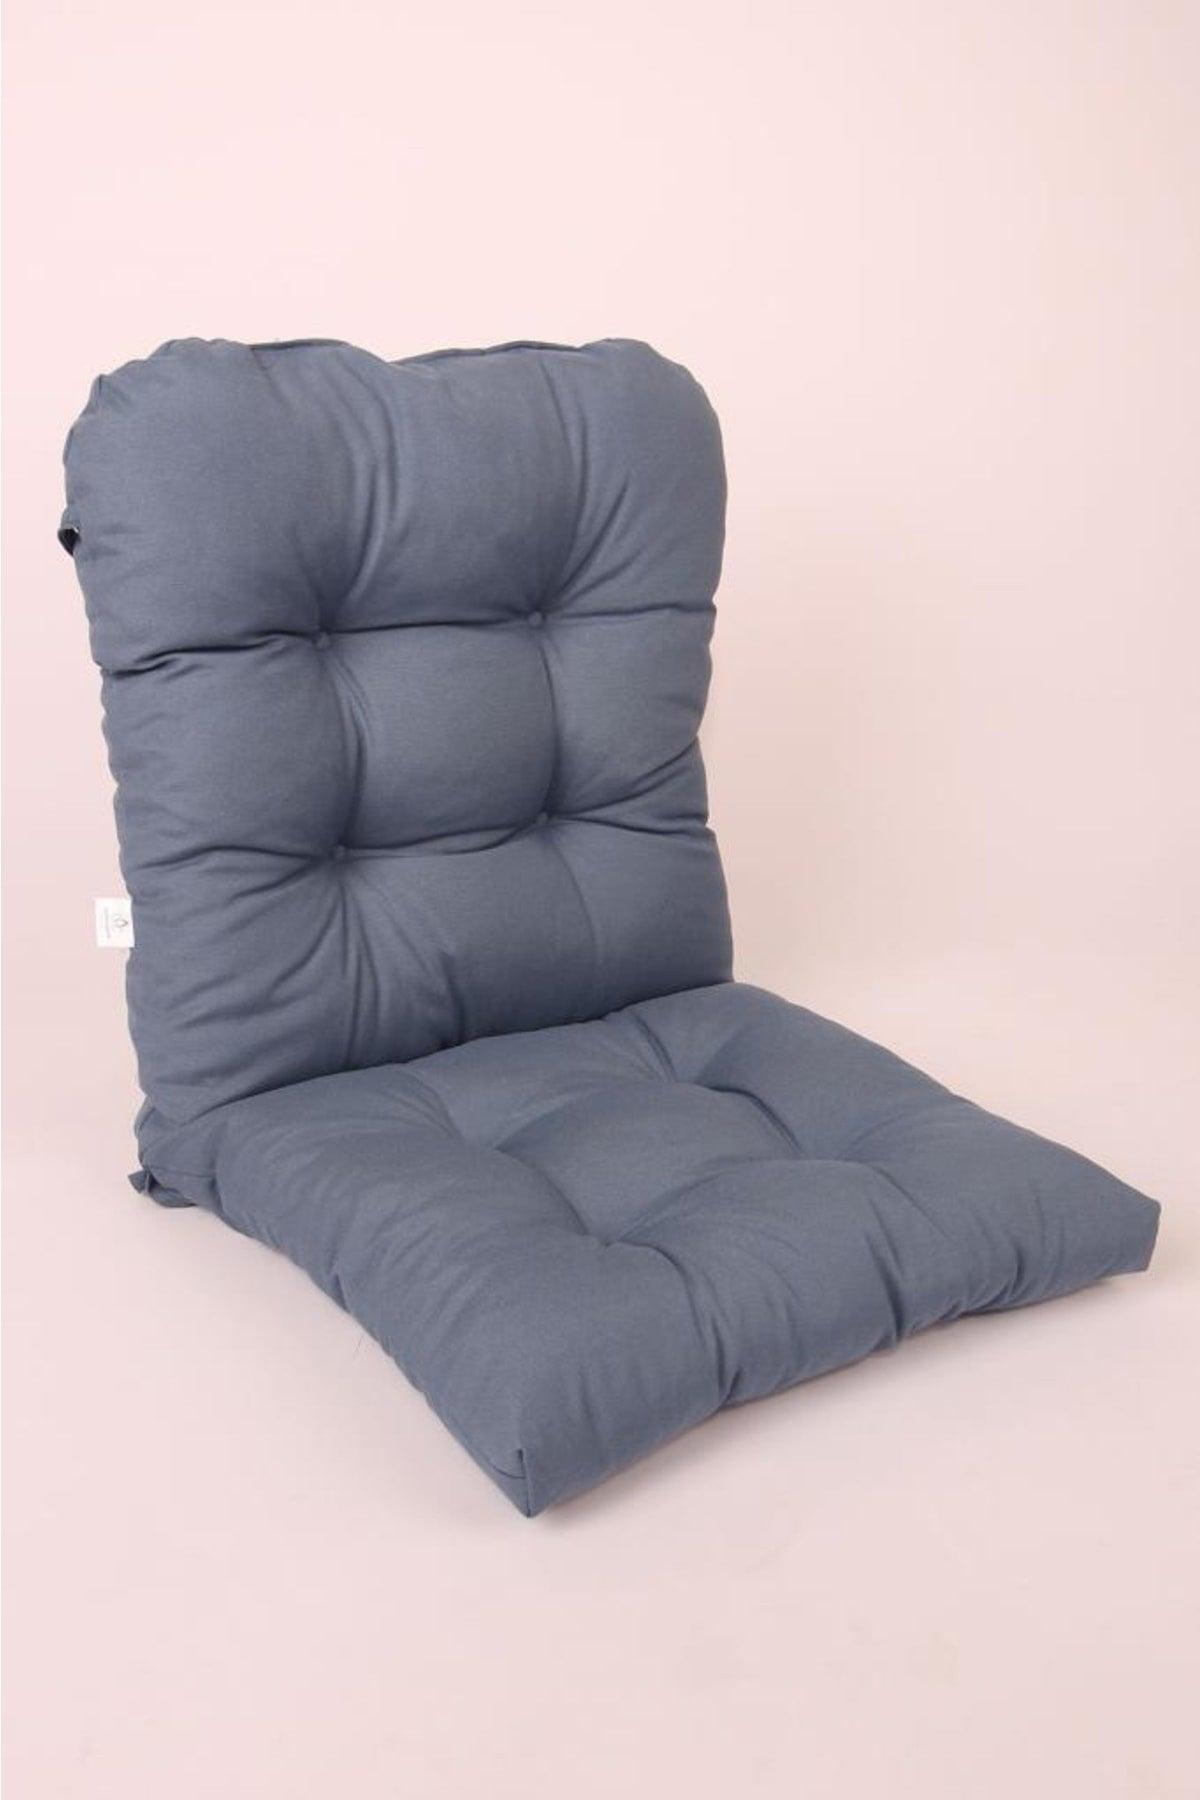 Neva Pofidik Petrol Backed Chair Cushion Specially Stitched Laced 44x94 Cm - Swordslife